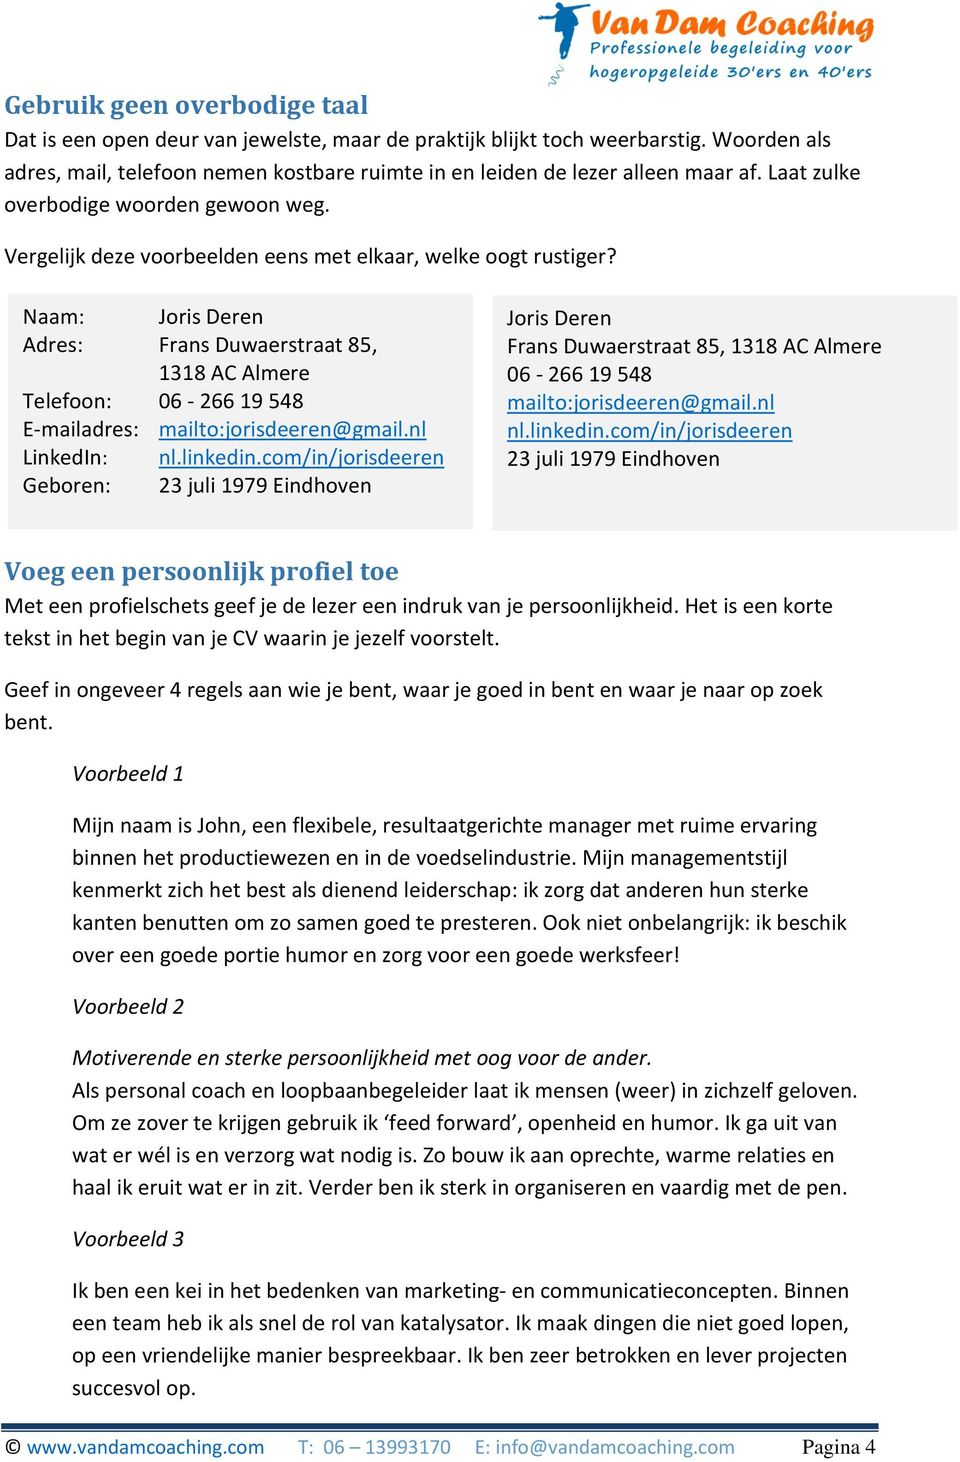 Naam: Joris Deren Adres: Frans Duwaerstraat 85, 1318 AC Almere Telefoon: 06-266 19 548 E-mailadres: mailto:jorisdeeren@gmail.nl LinkedIn: nl.linkedin.